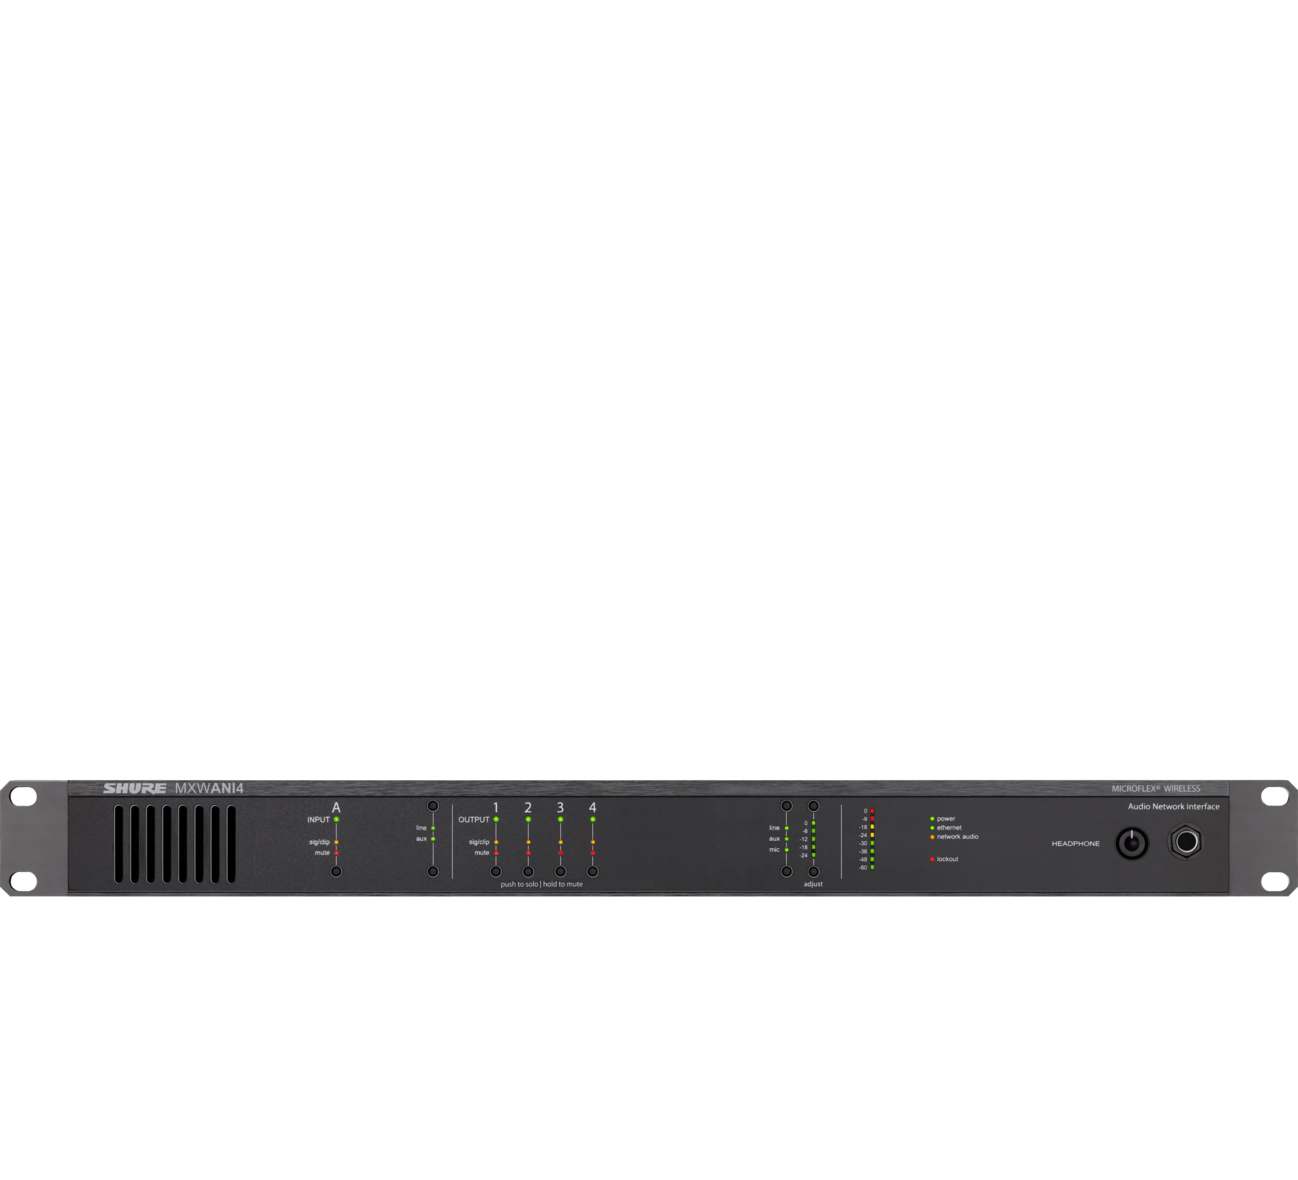 Shure Microflex Wireless 4 Channel Audio Network Interface MXWANI4 Free Shipping 